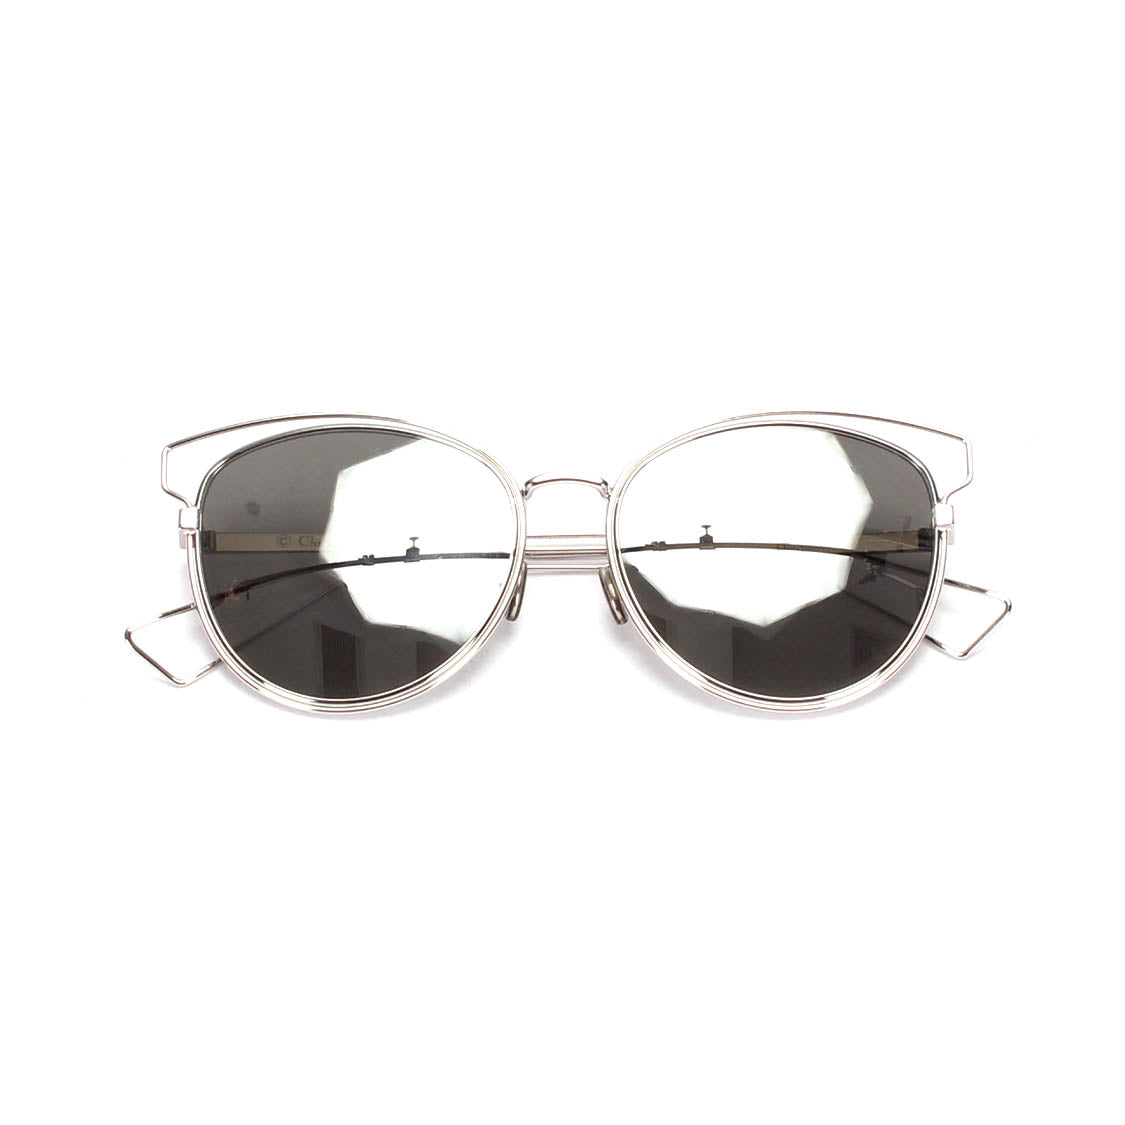 Sideral 2 Sunglasses